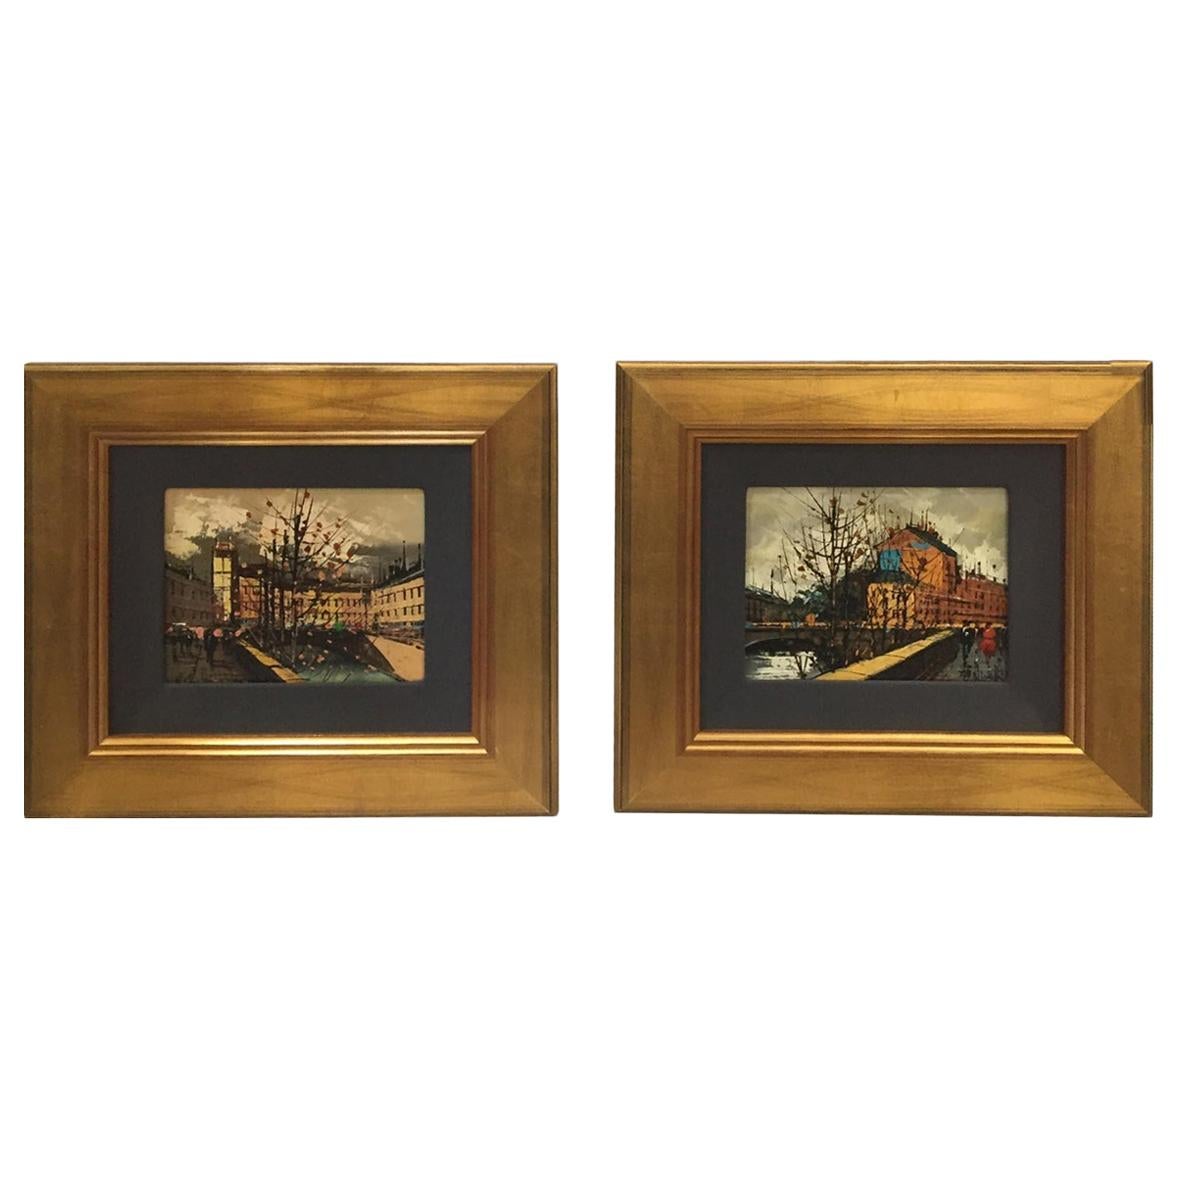 Pair of European Street Scenes Paintings 1950s by Listed Artist Ninetti